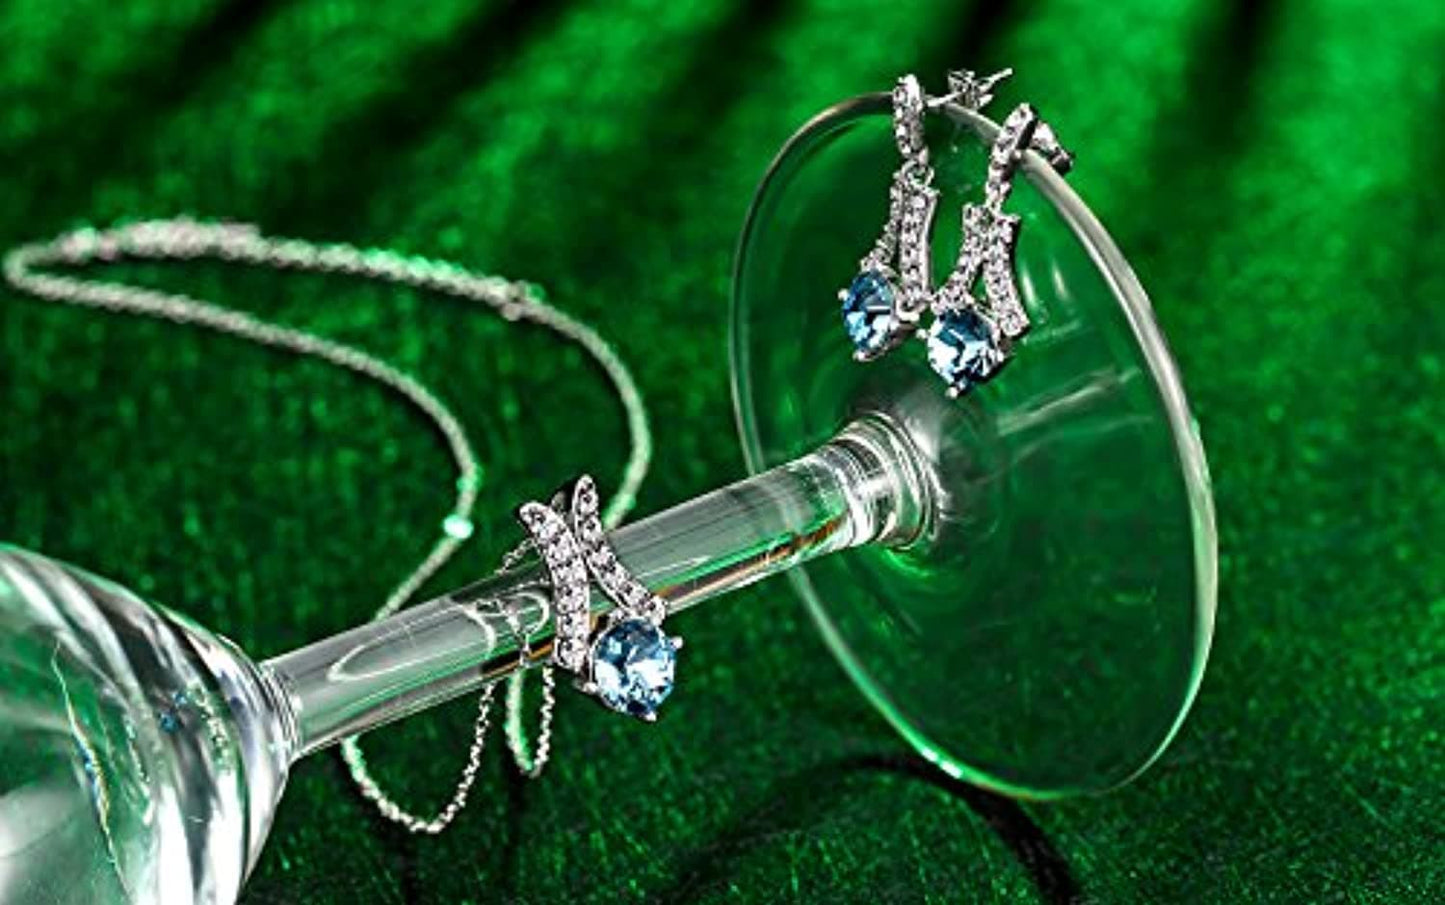 Authentic Crystals from Swarovski Designer Pendant Set Jewellery